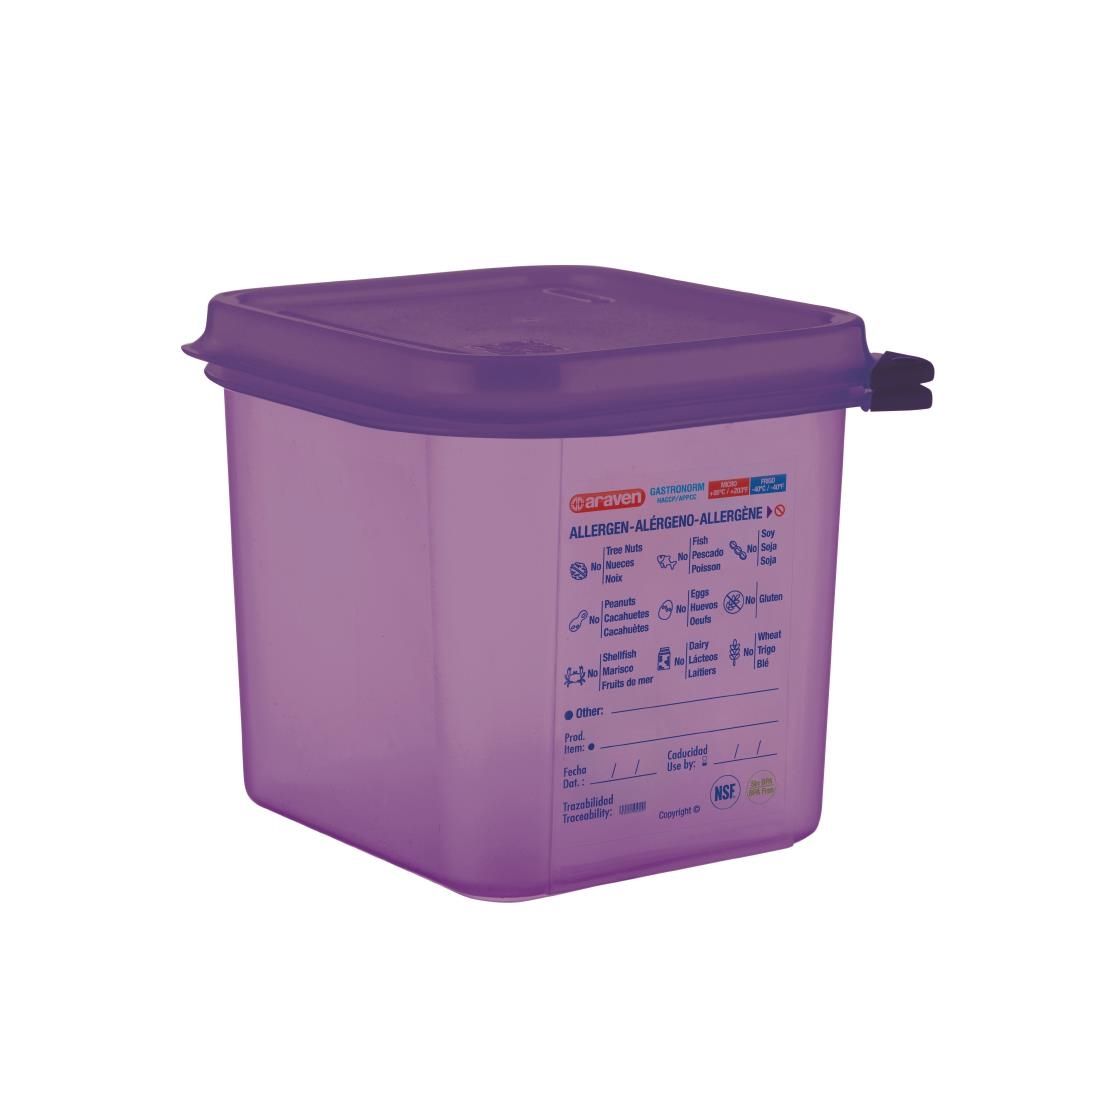 Araven Allergen Polypropylene 1/6 Gastronorm Food Container Purple 2.6L JD Catering Equipment Solutions Ltd